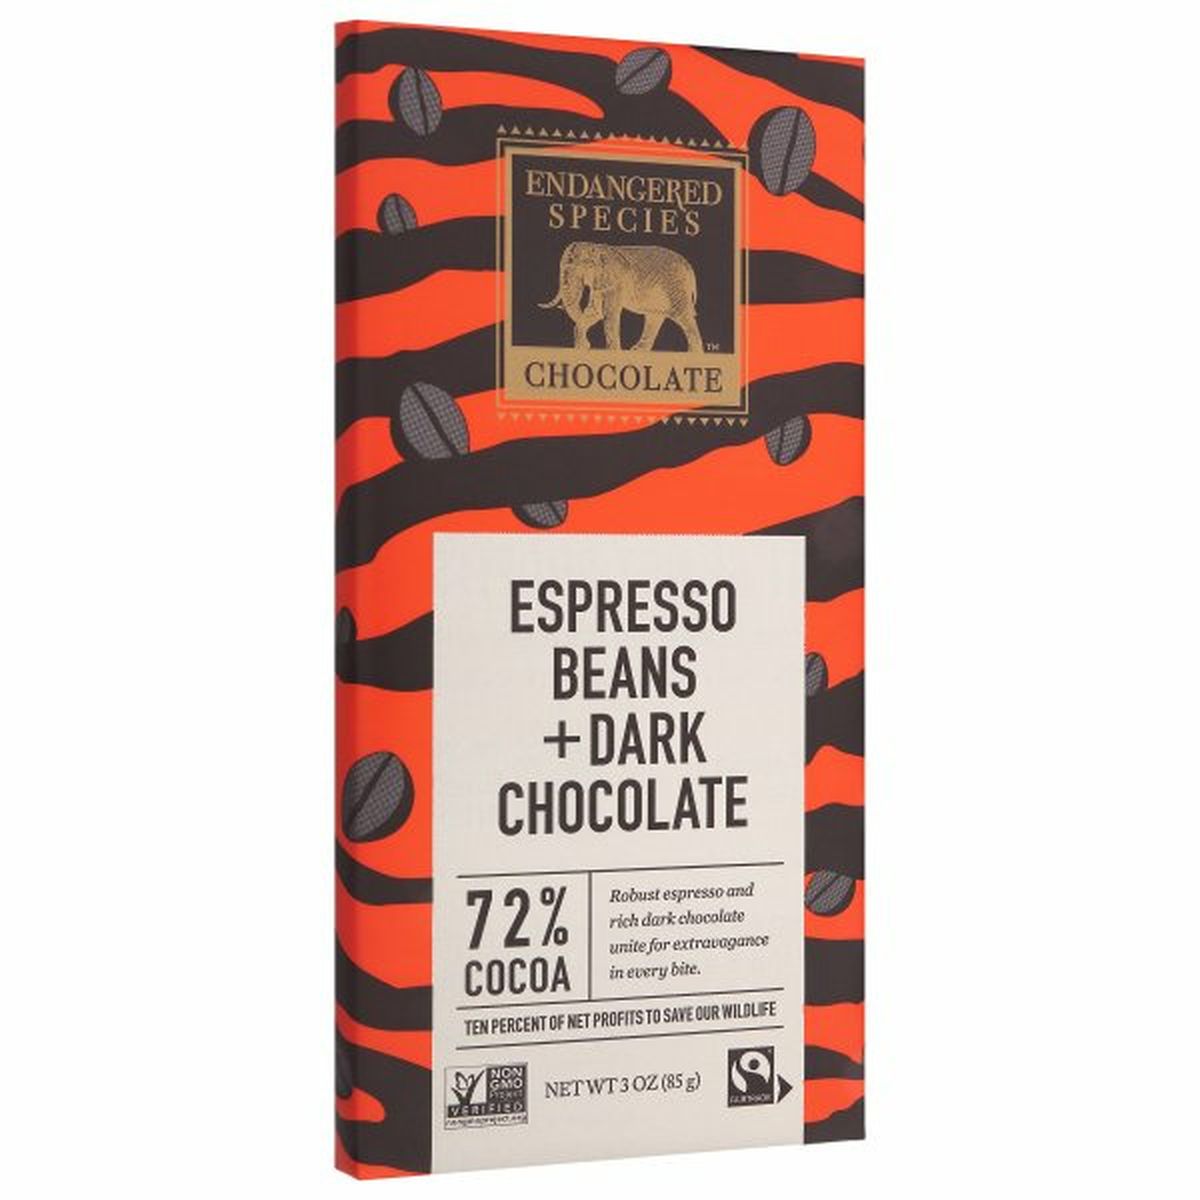 Calories in Endangered Species Chocolate, Espresso Beans + Dark Chocolate, 72% Cocoa